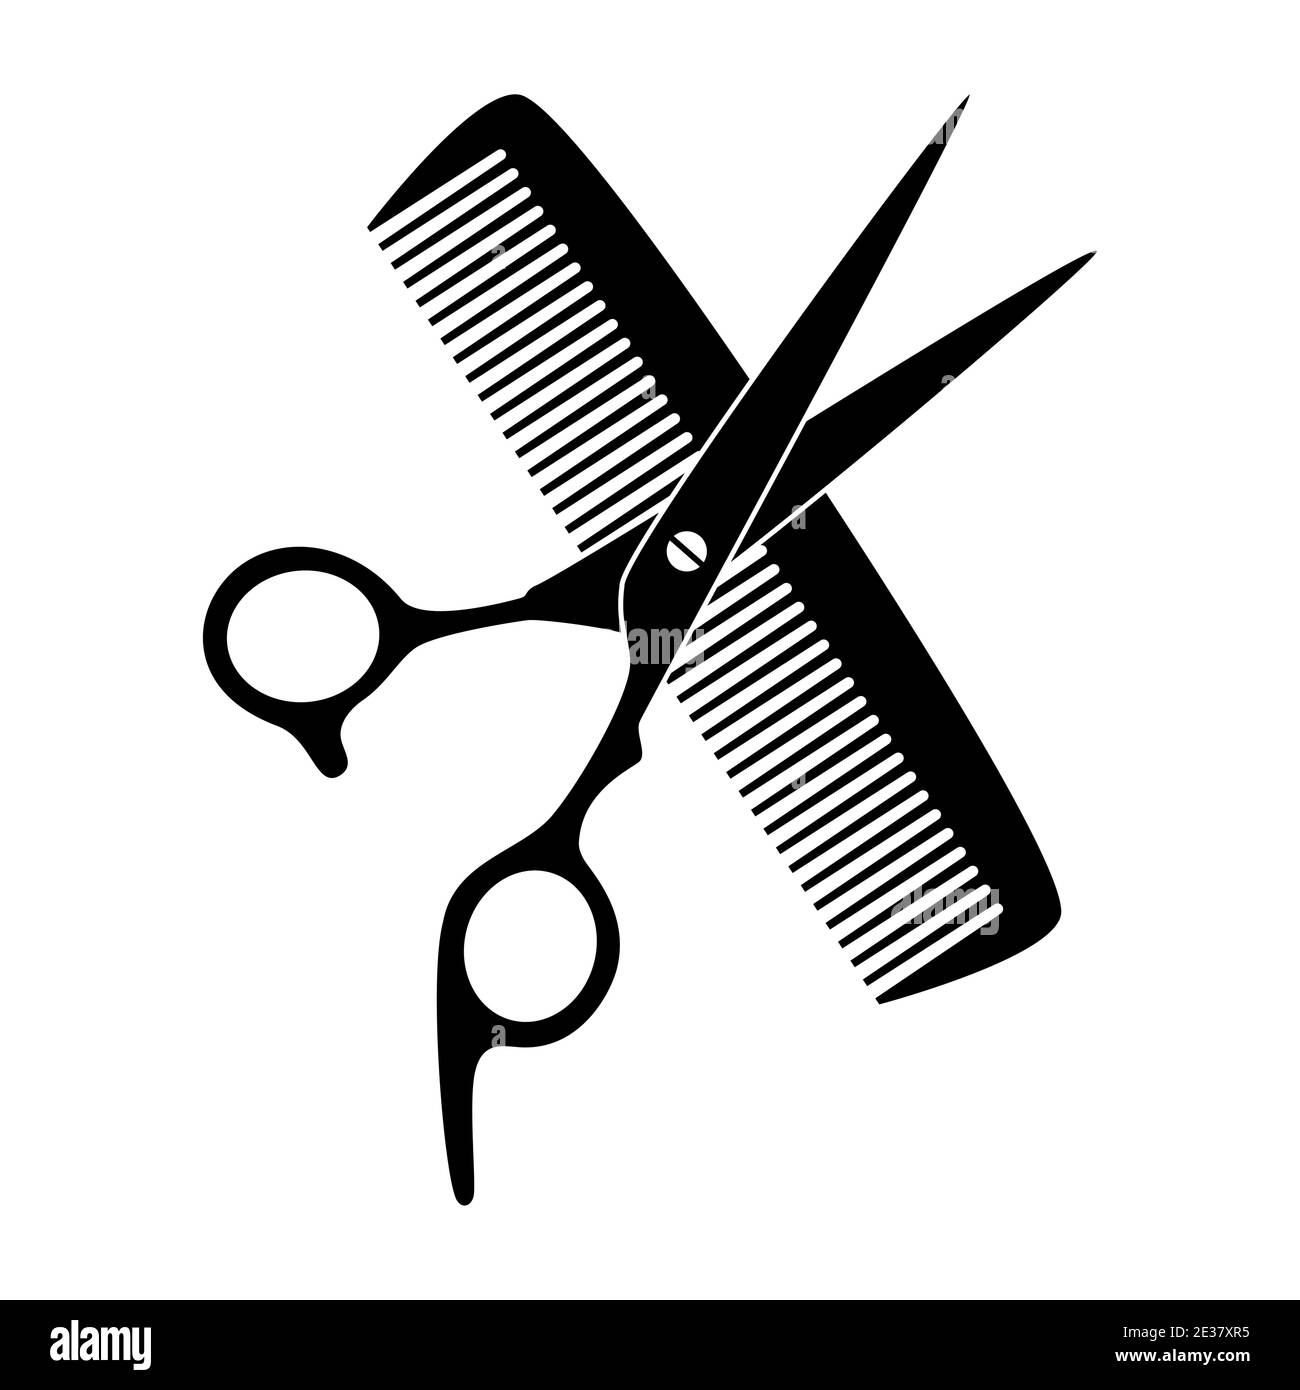 Scissors, comb, barber shop, icon, logo Stock Vector